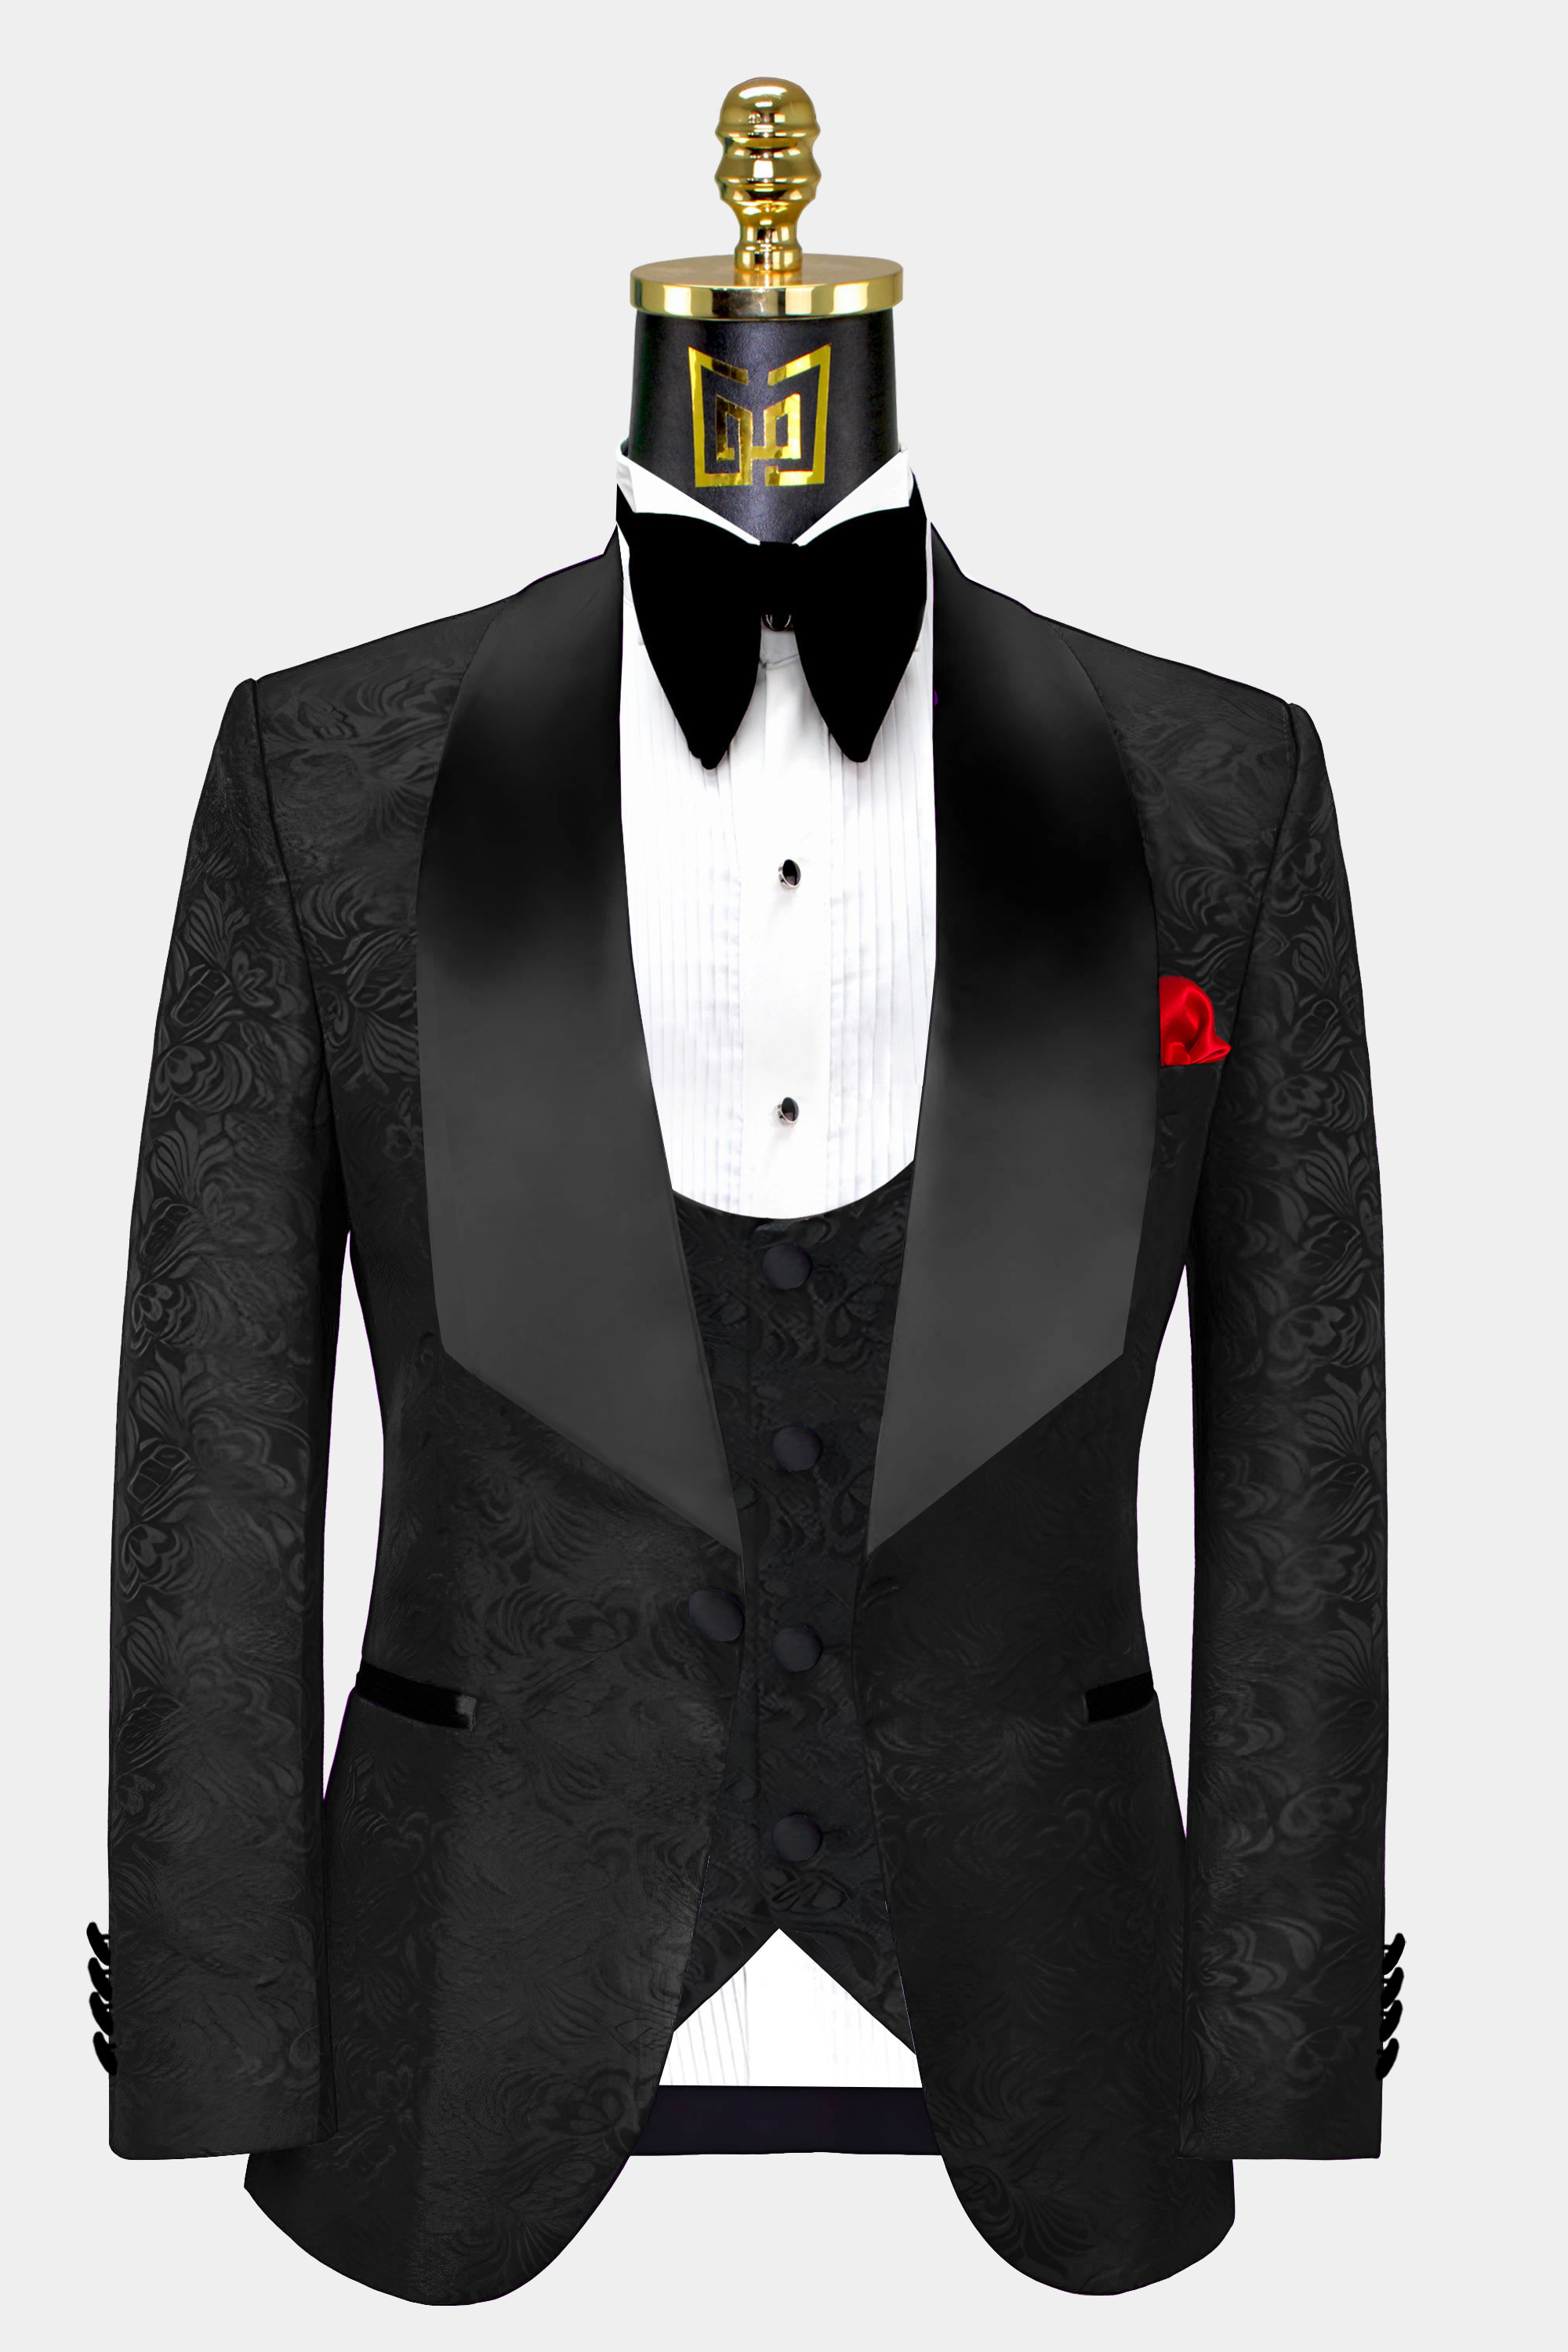 All Black Tuxedo Jacket Groom Wedding Floral Blazer From Gentlemansguru.com  